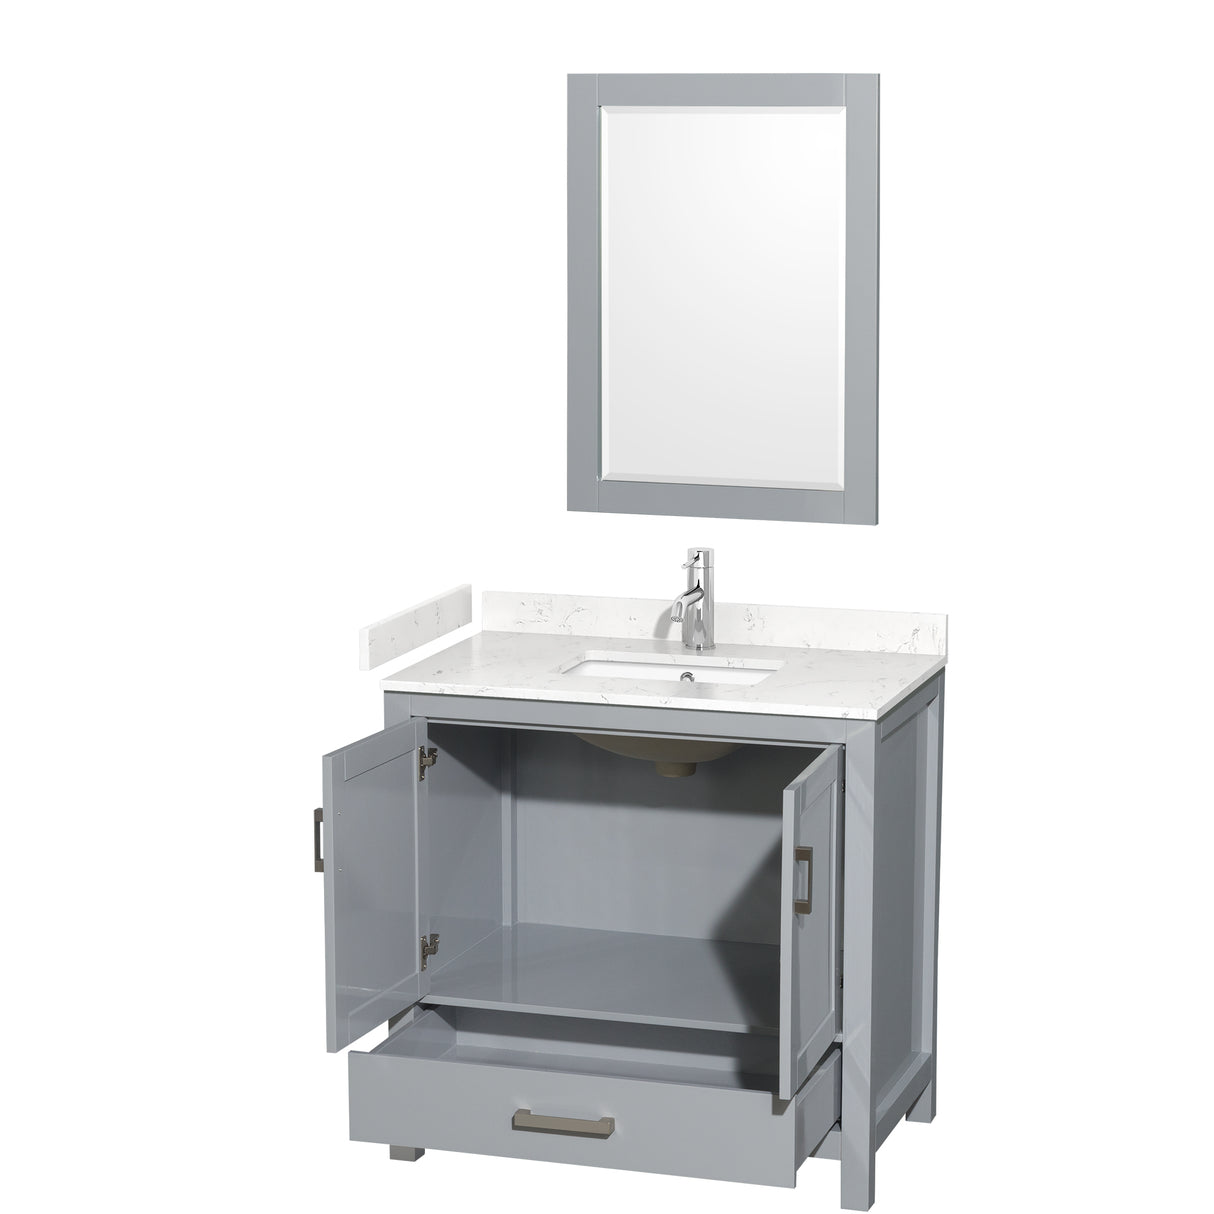 Sheffield 36 Inch Single Bathroom Vanity in Gray Carrara Cultured Marble Countertop Undermount Square Sink 24 Inch Mirror